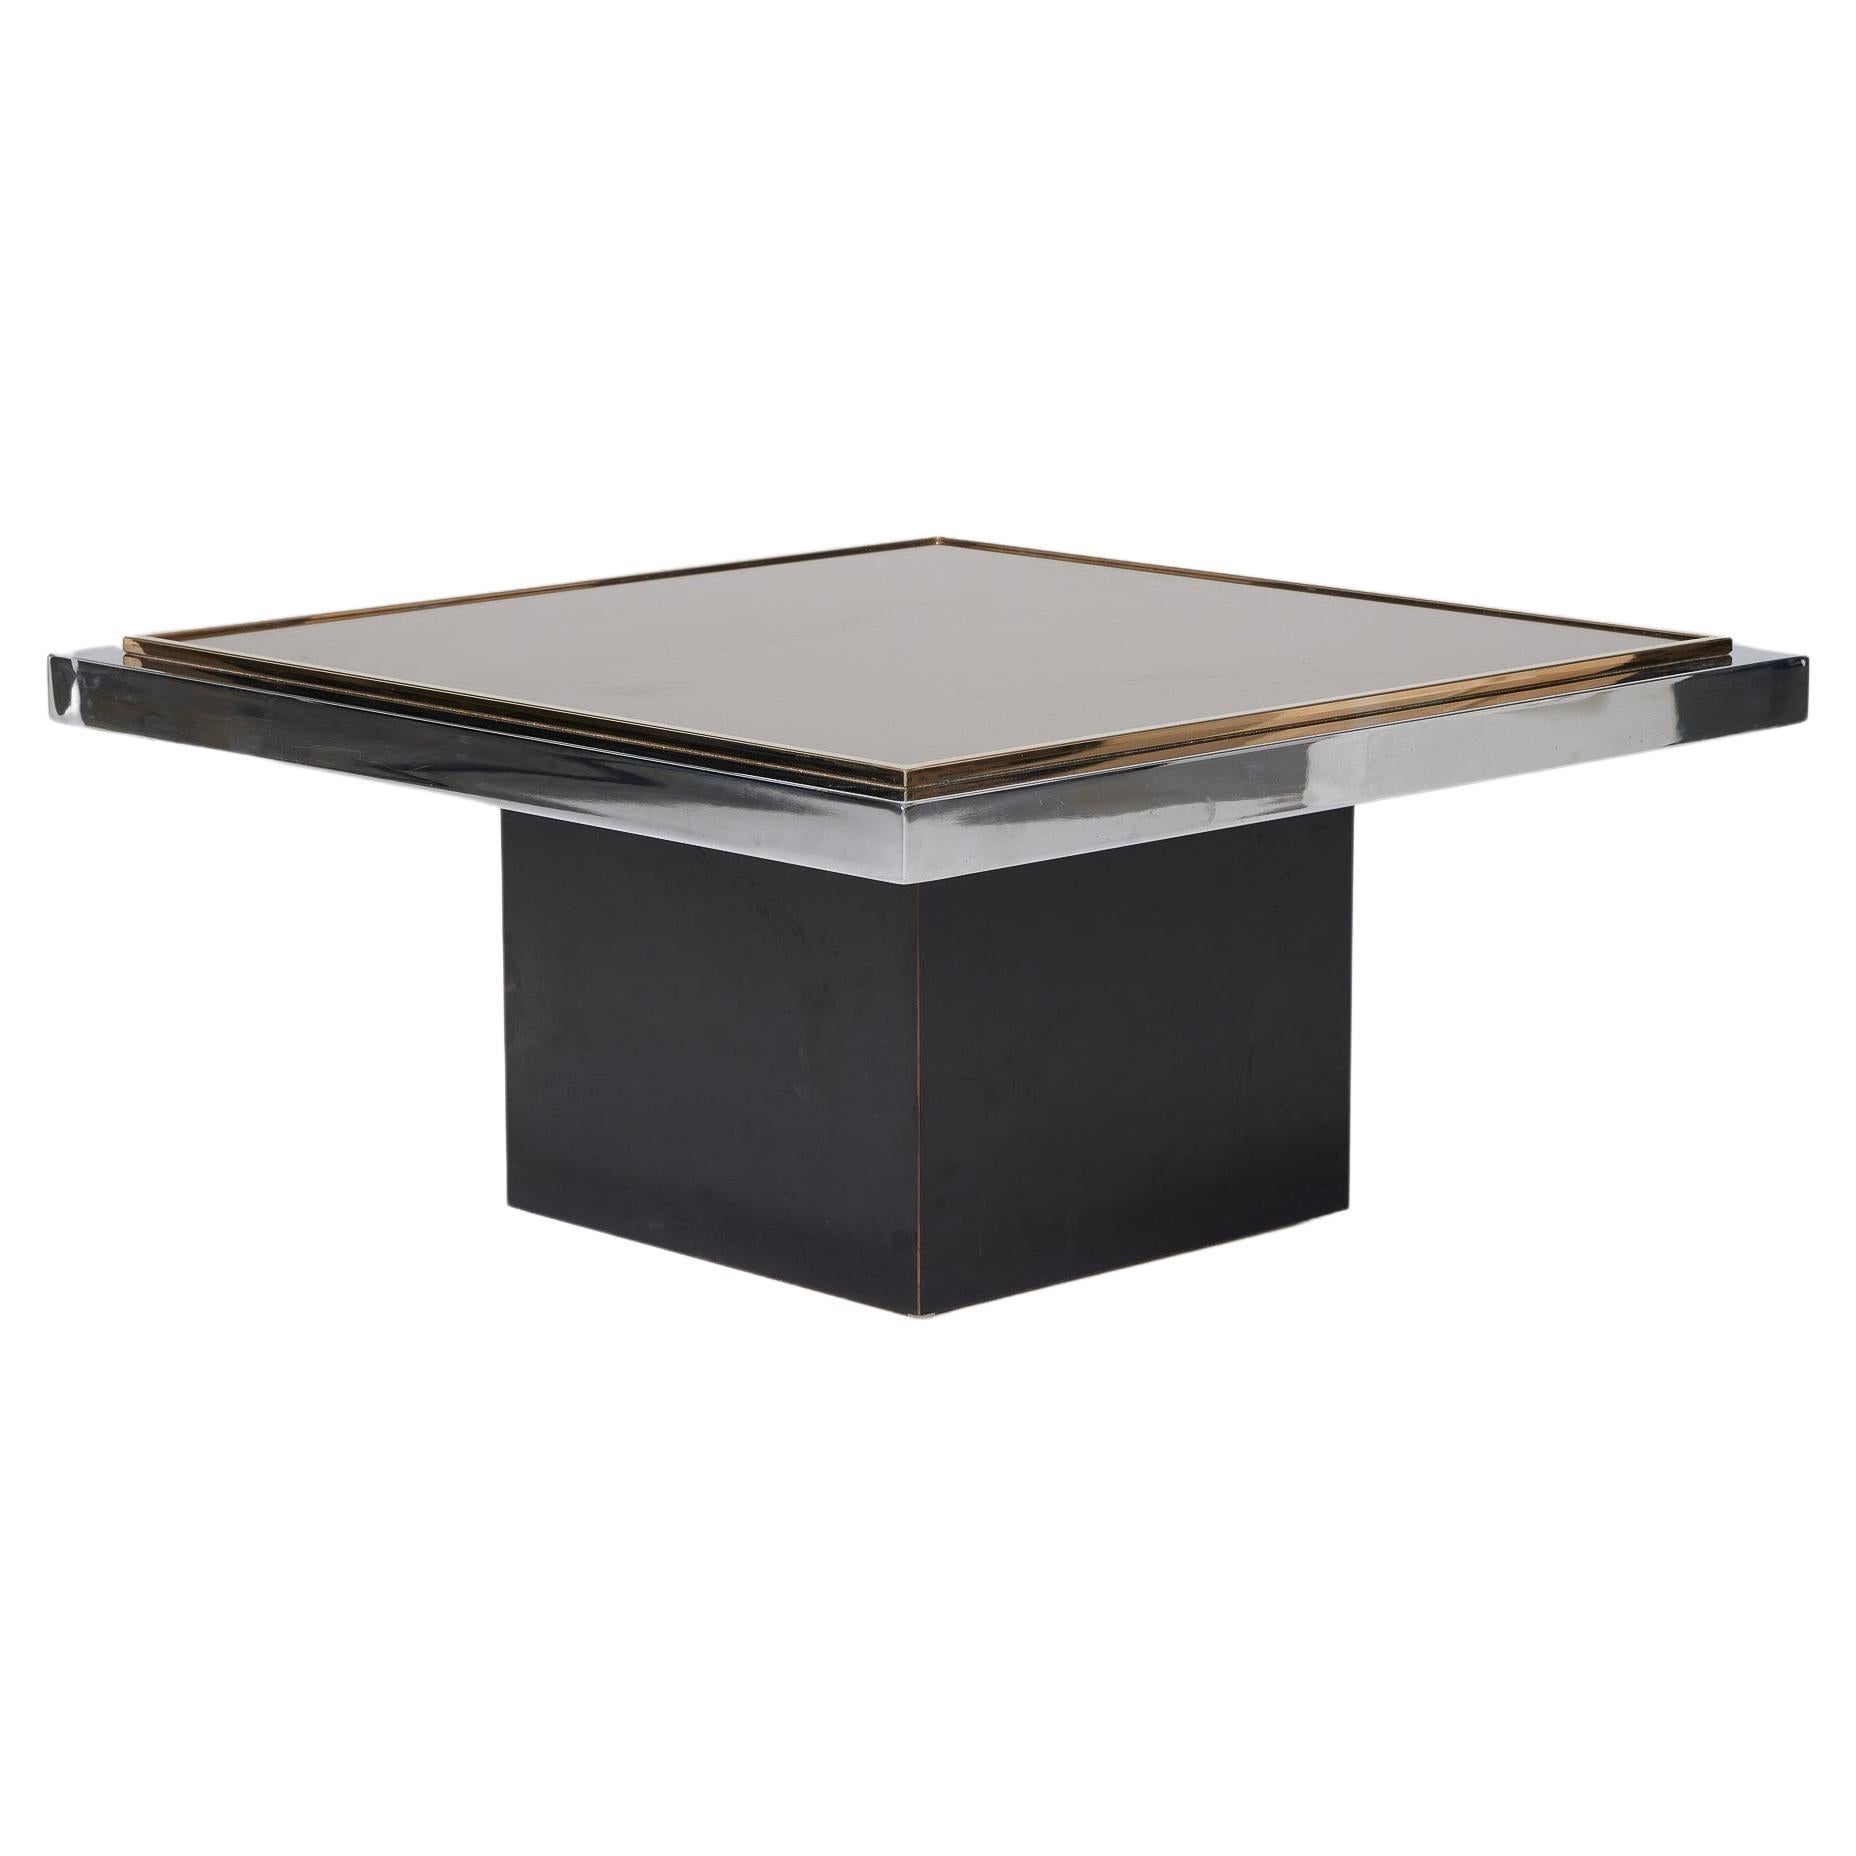 Chrome-plated metal coffee table